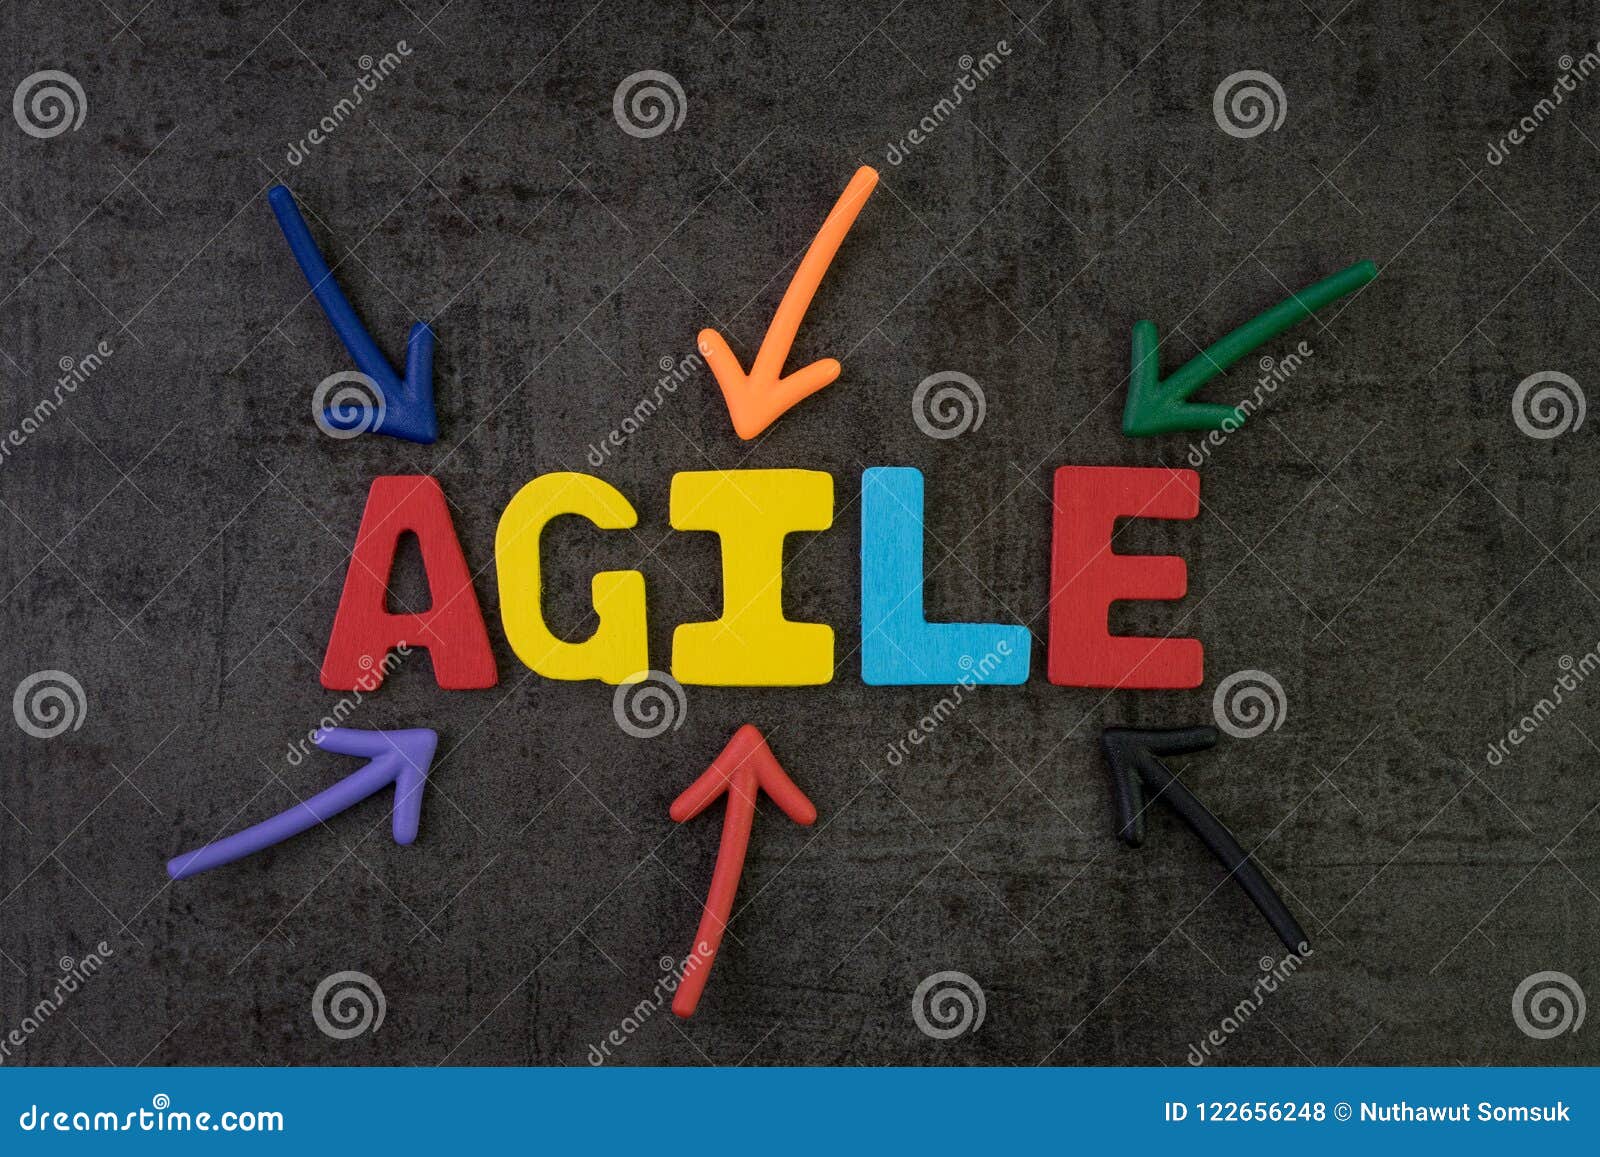 agile development, new methodology for software, idea, workflow